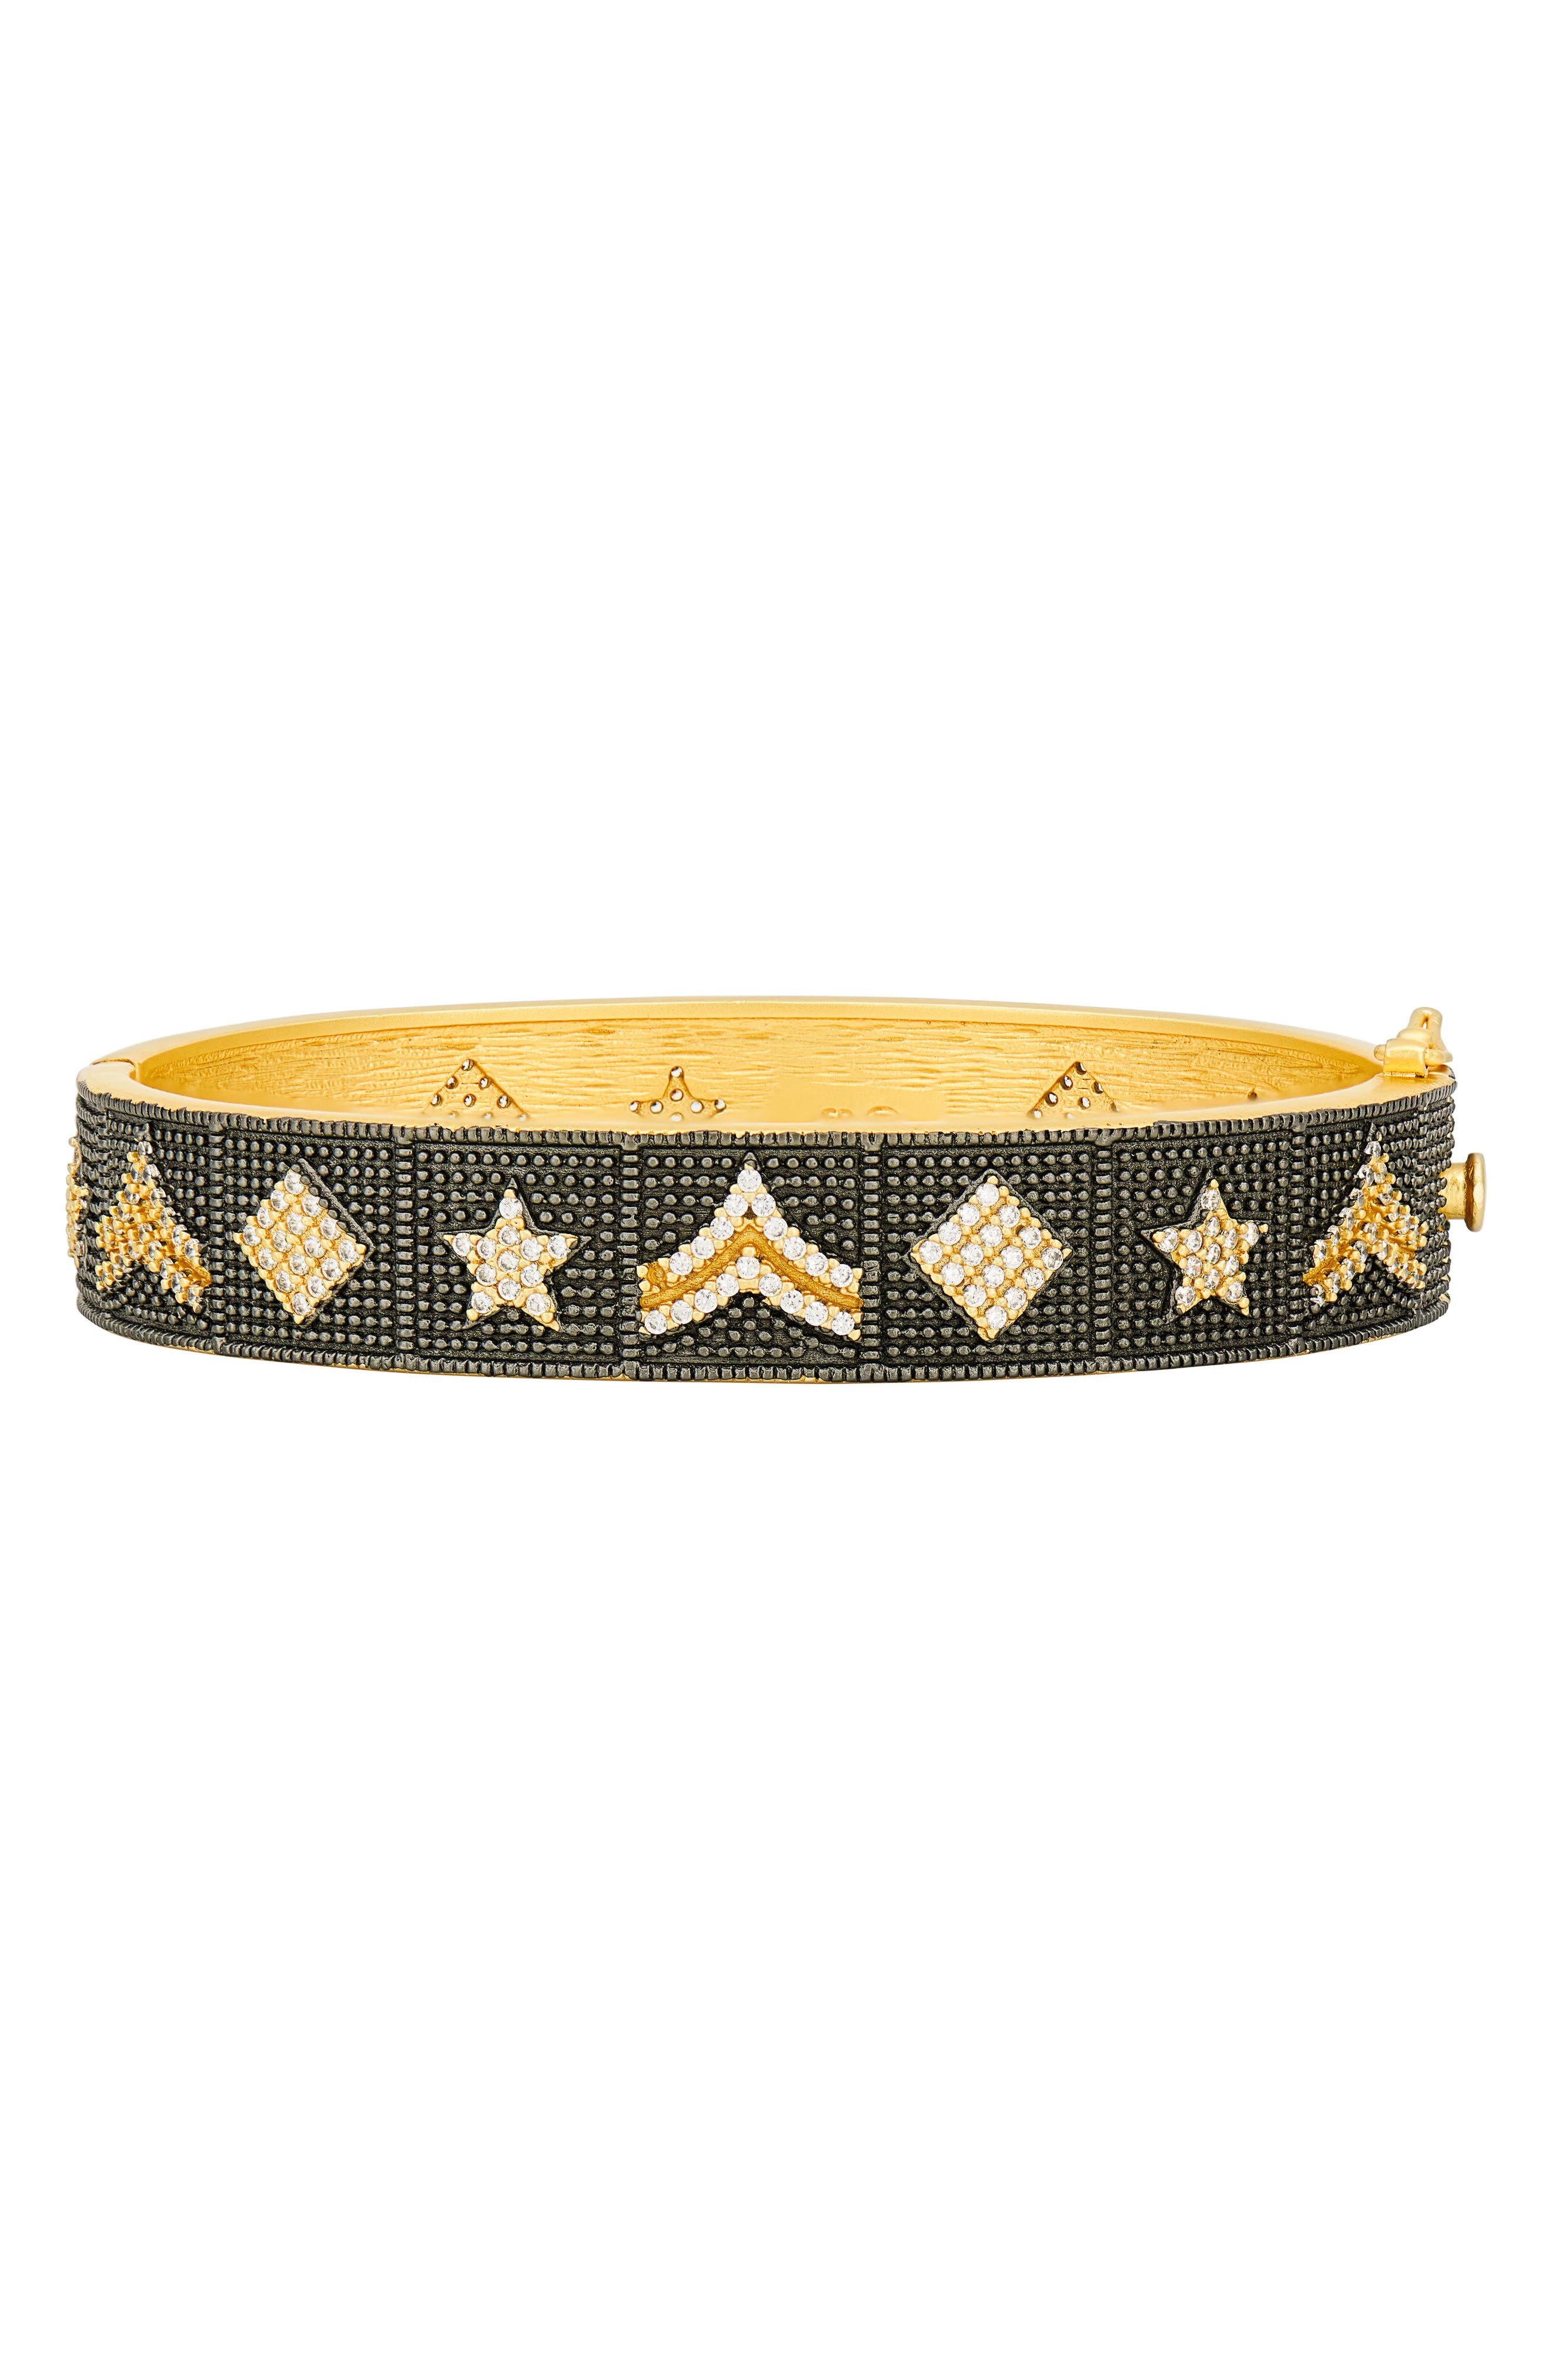 FREIDA ROTHMAN West Point Chevron Stars Bangle Bracelet in Gold And Black at Nordstrom -  YRZB080220B-H